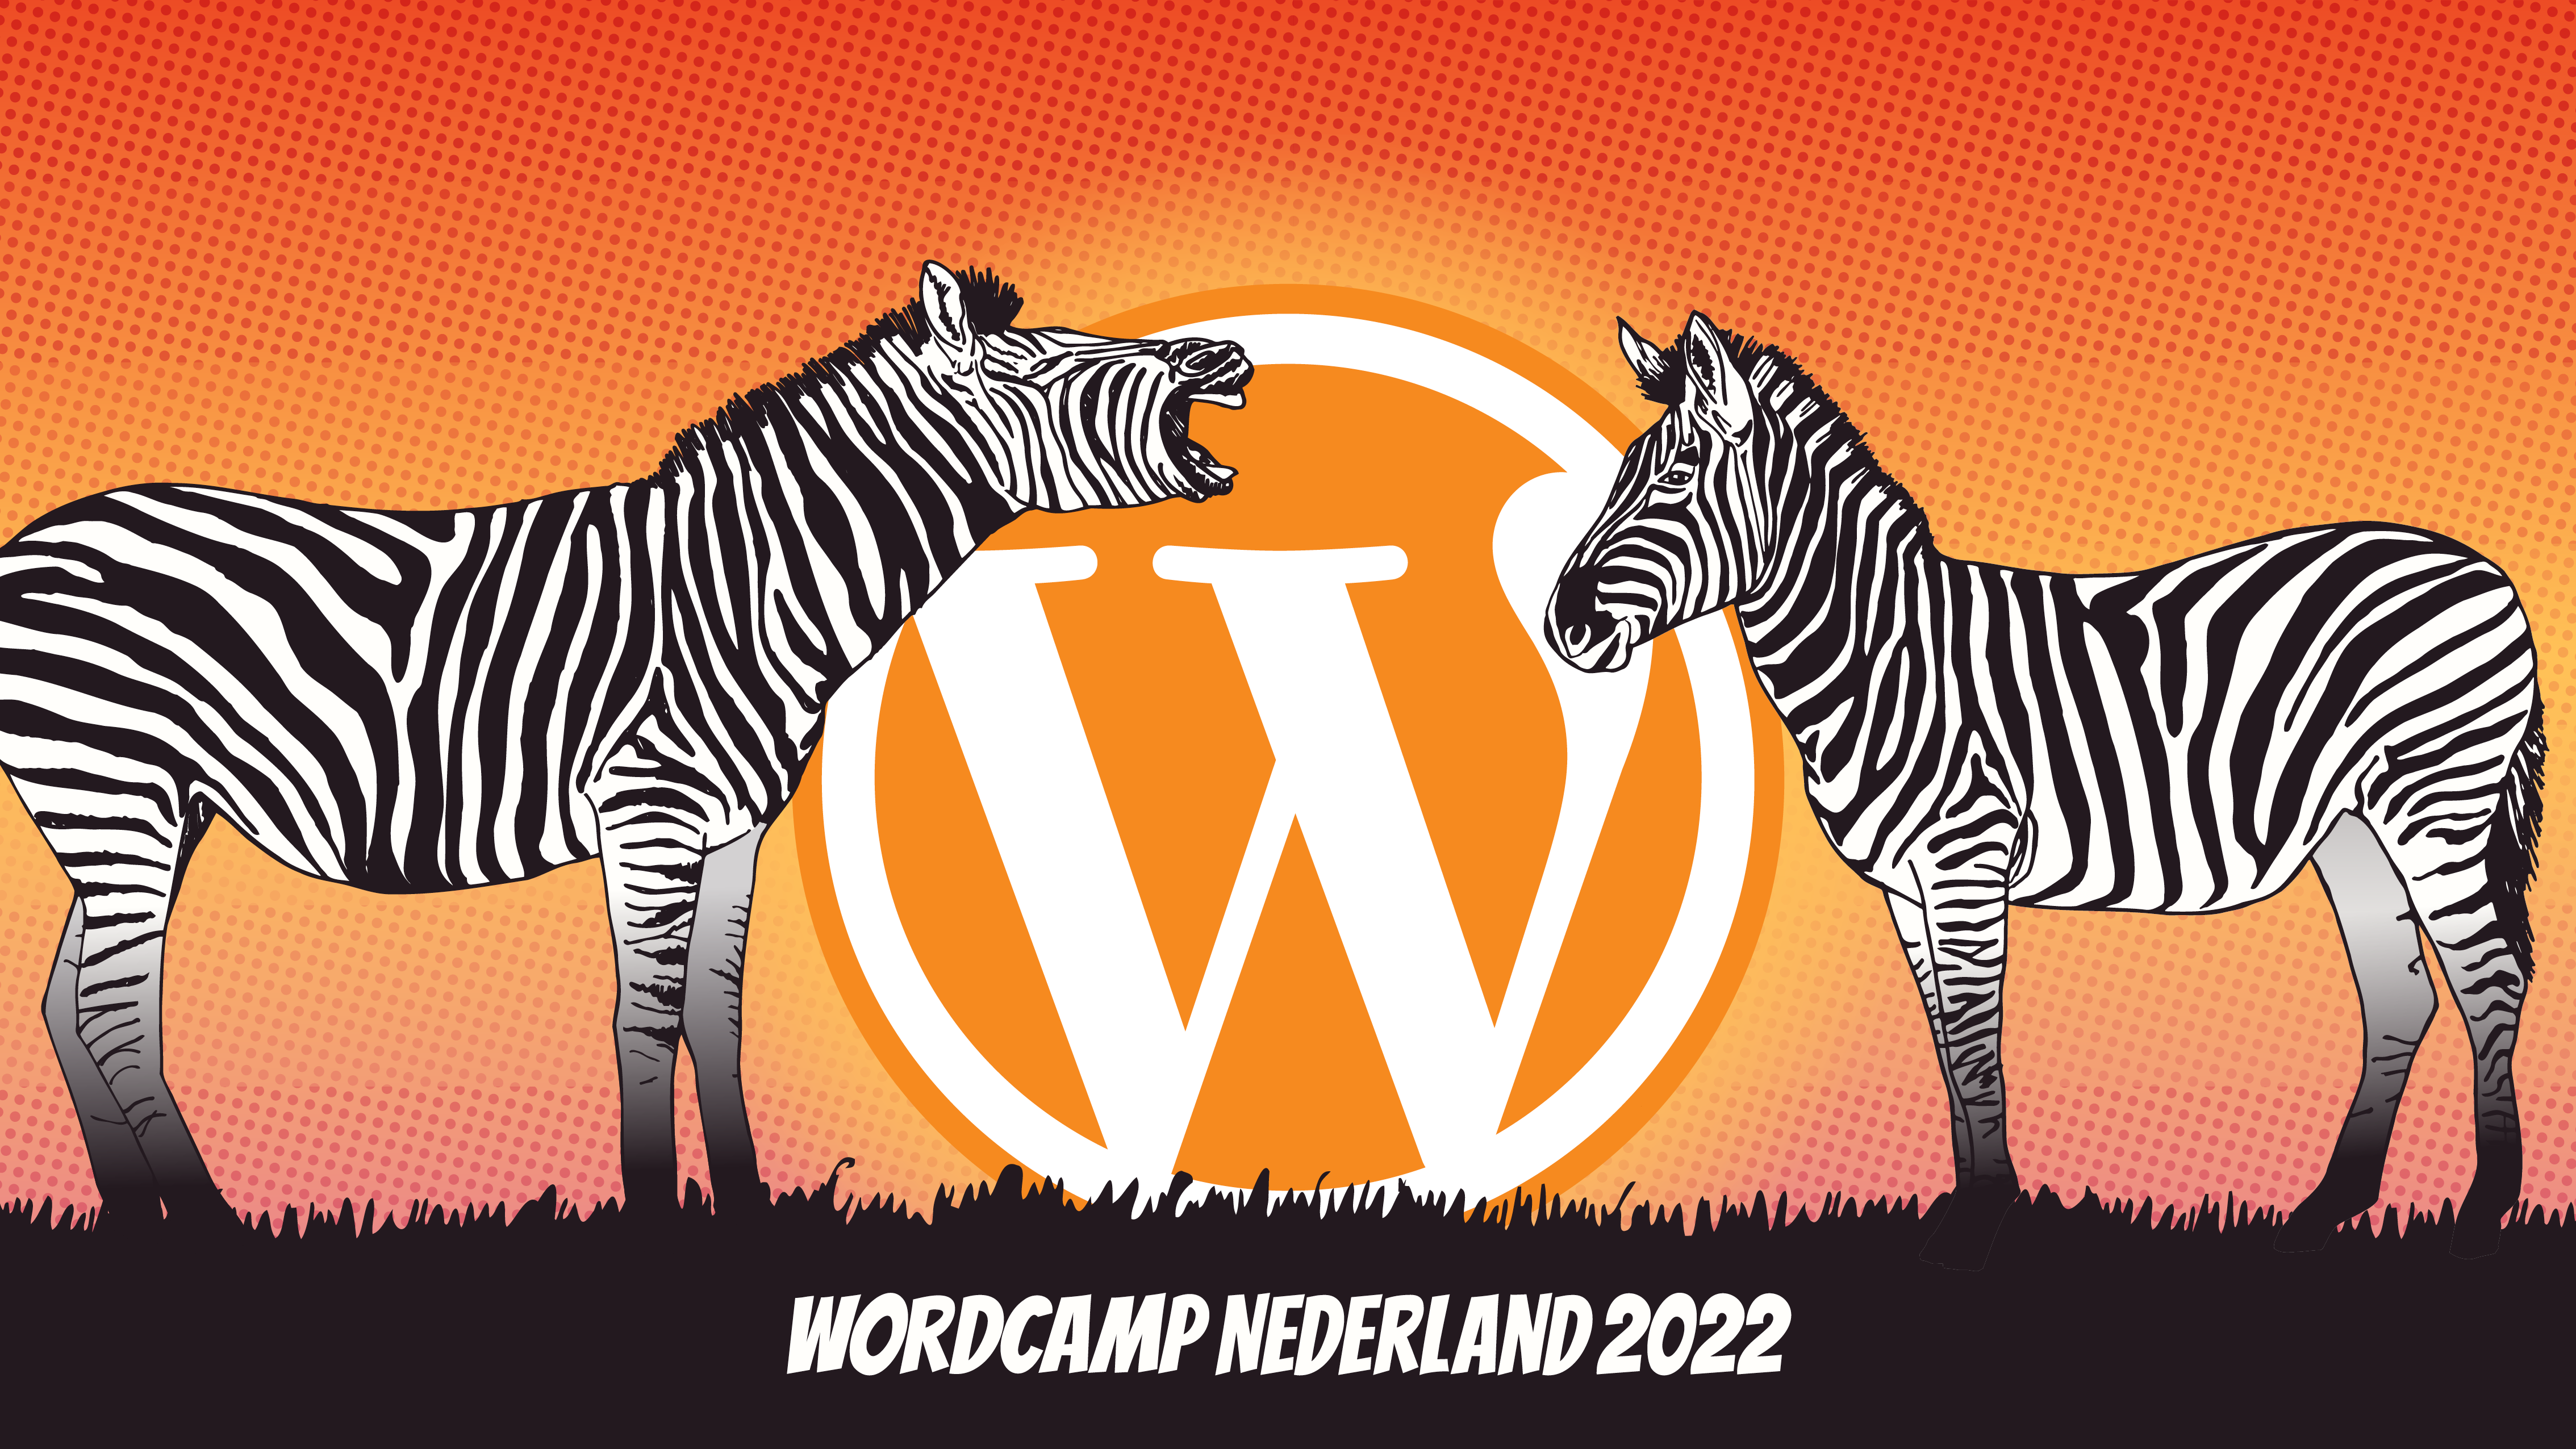 WordCamp Nederland 2022 • Zebras